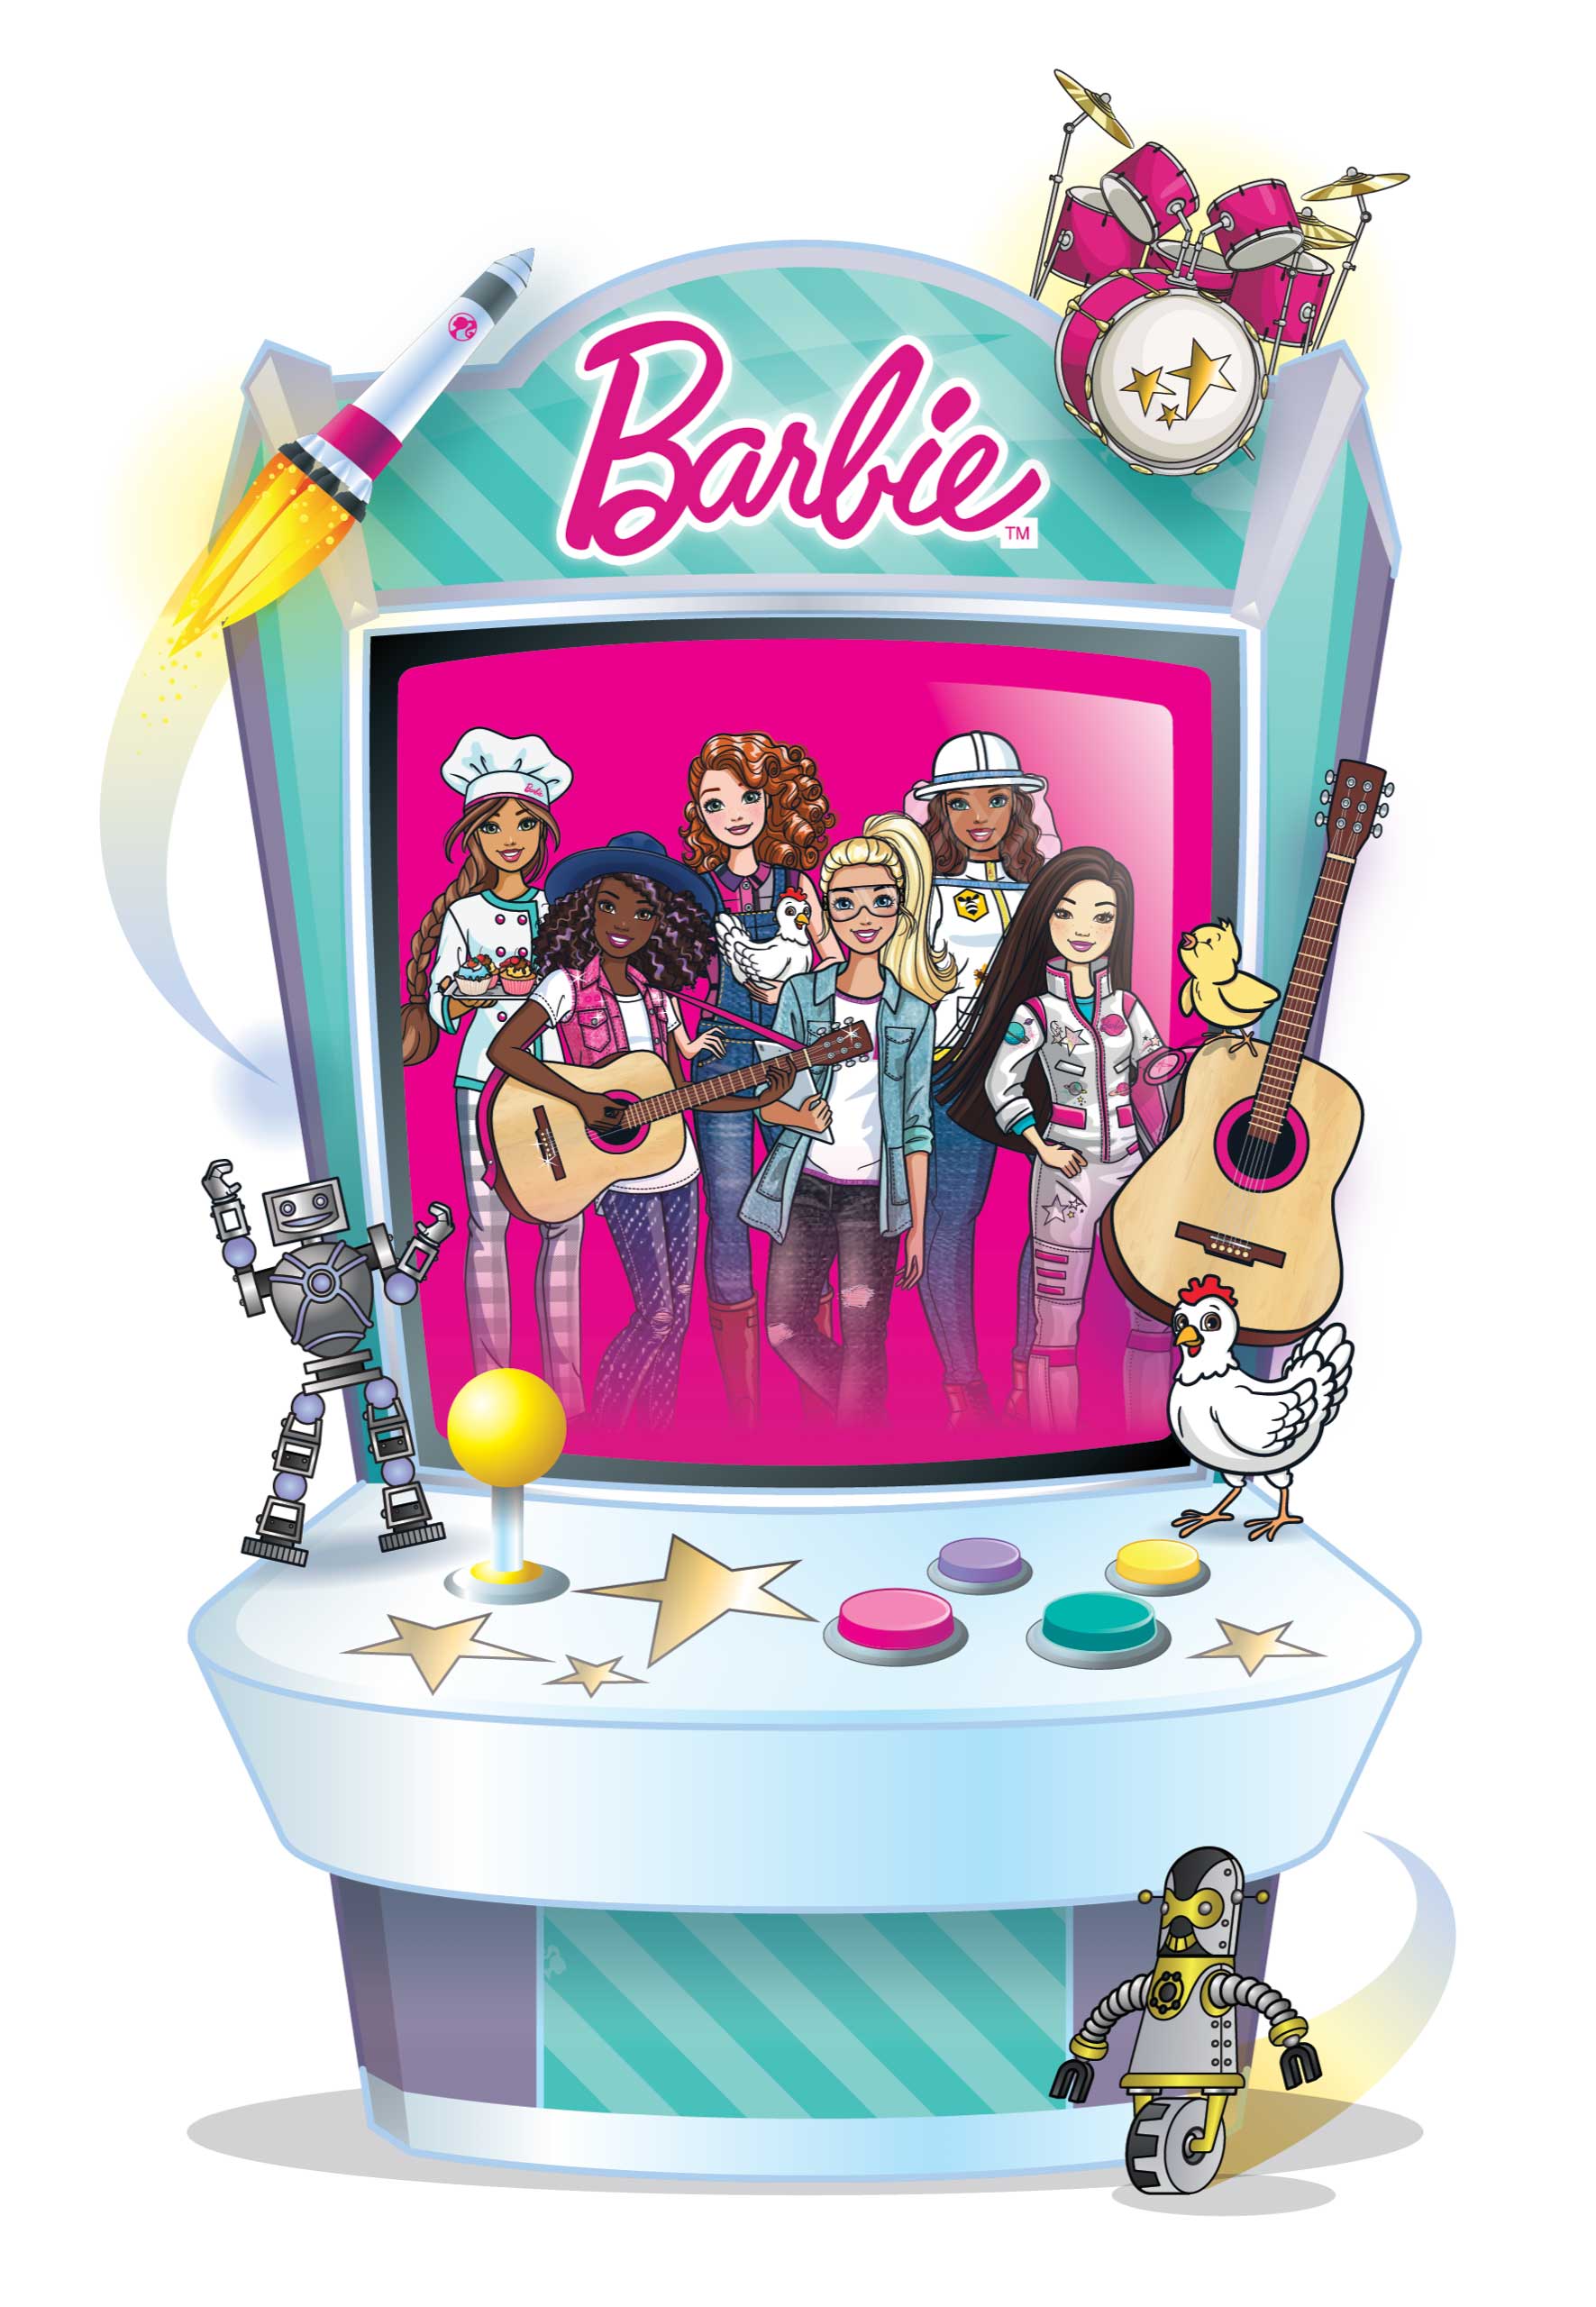 Chris Musselman Illustration barbie arcade